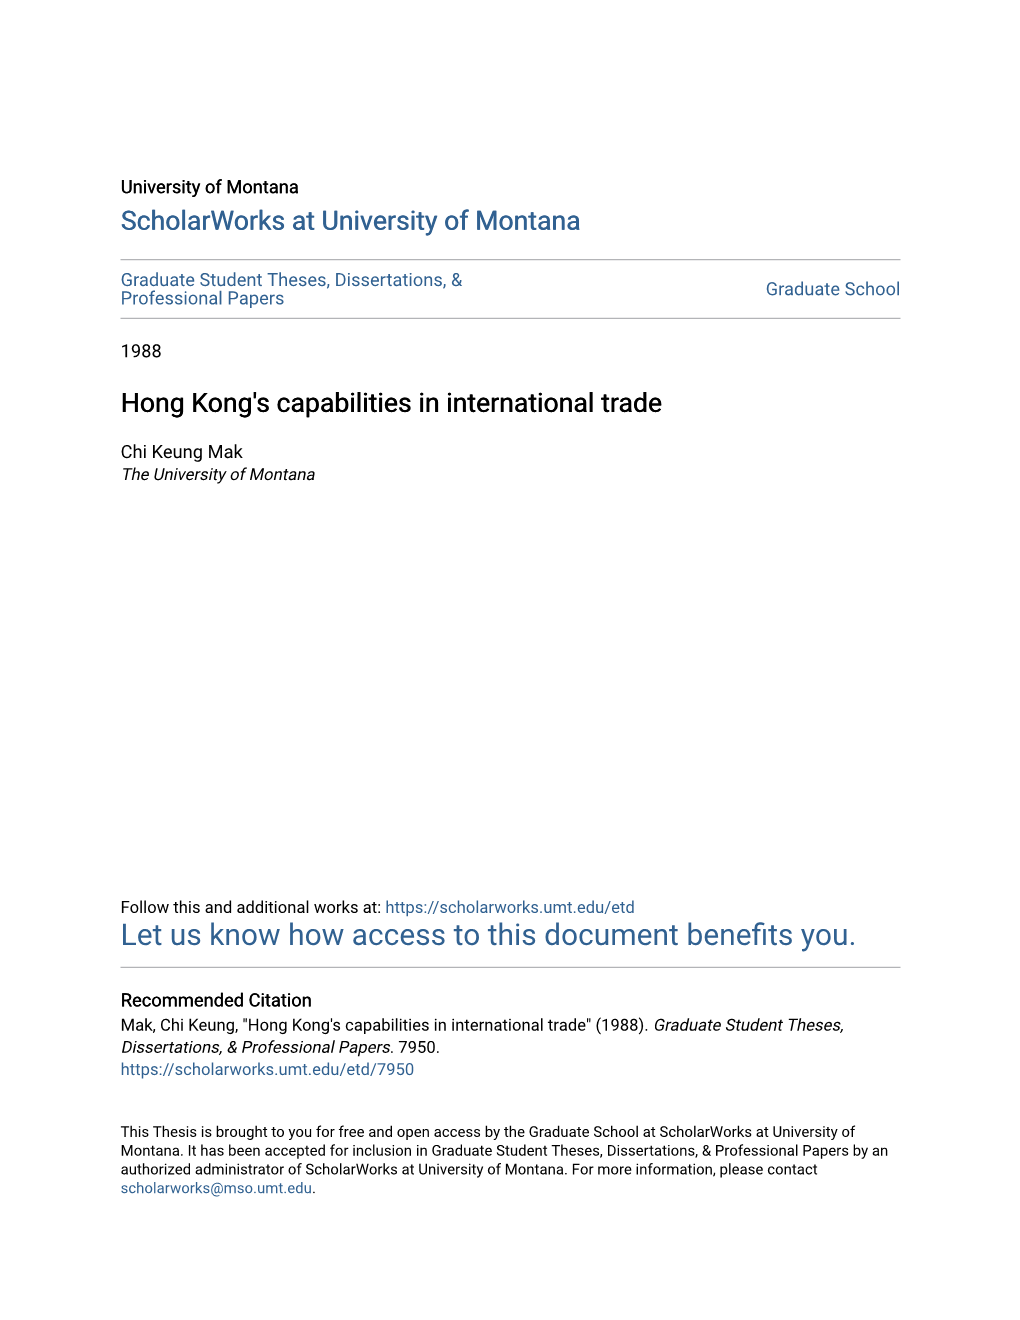 Hong Kong's Capabilities in International Trade